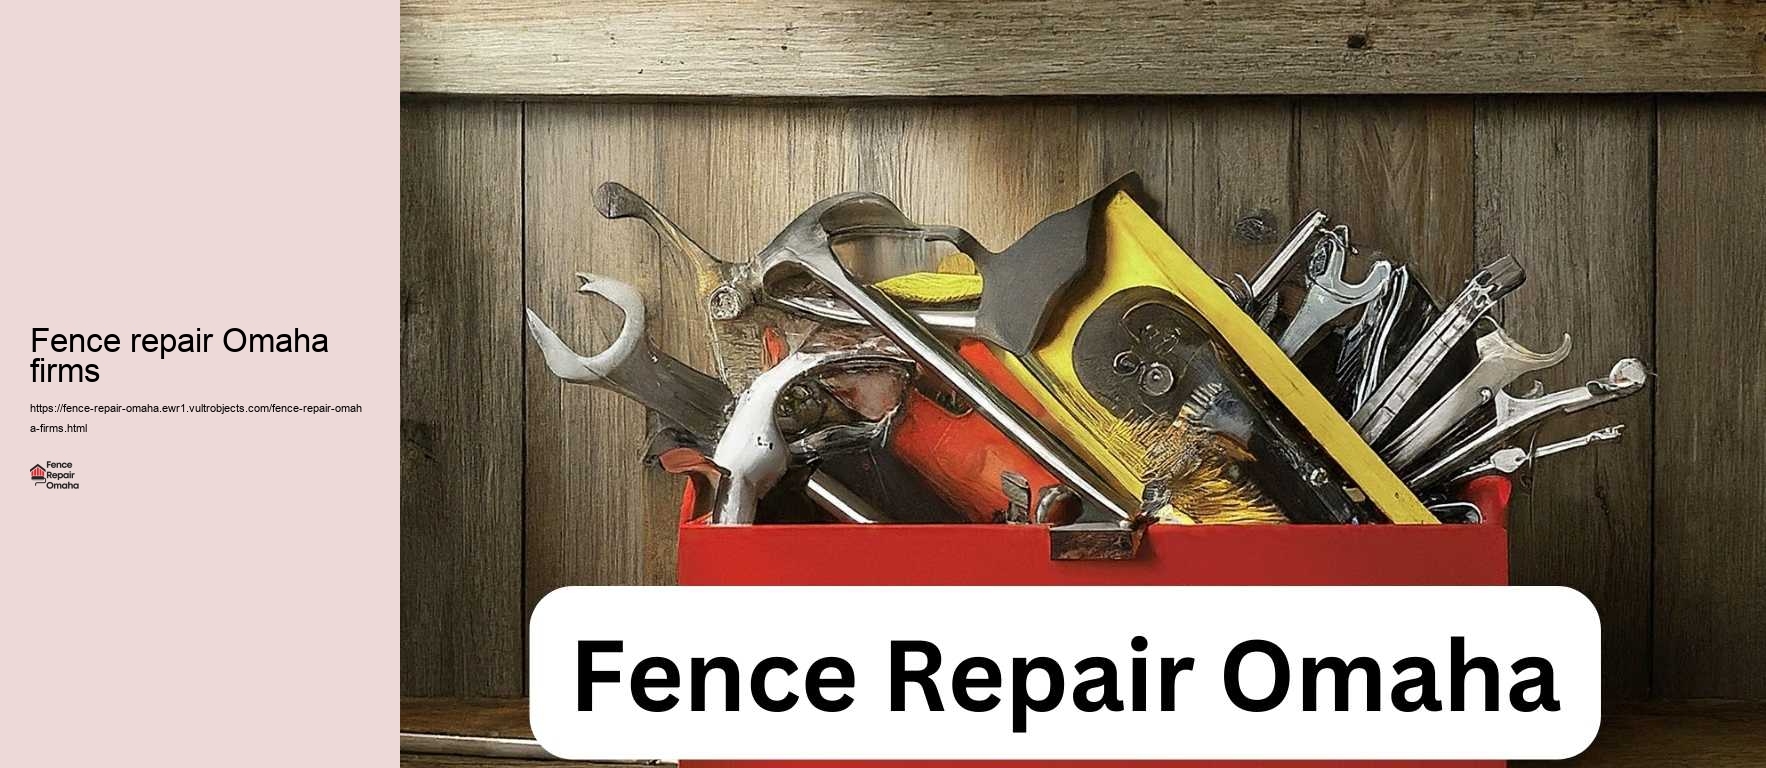 Fence repair Omaha firms